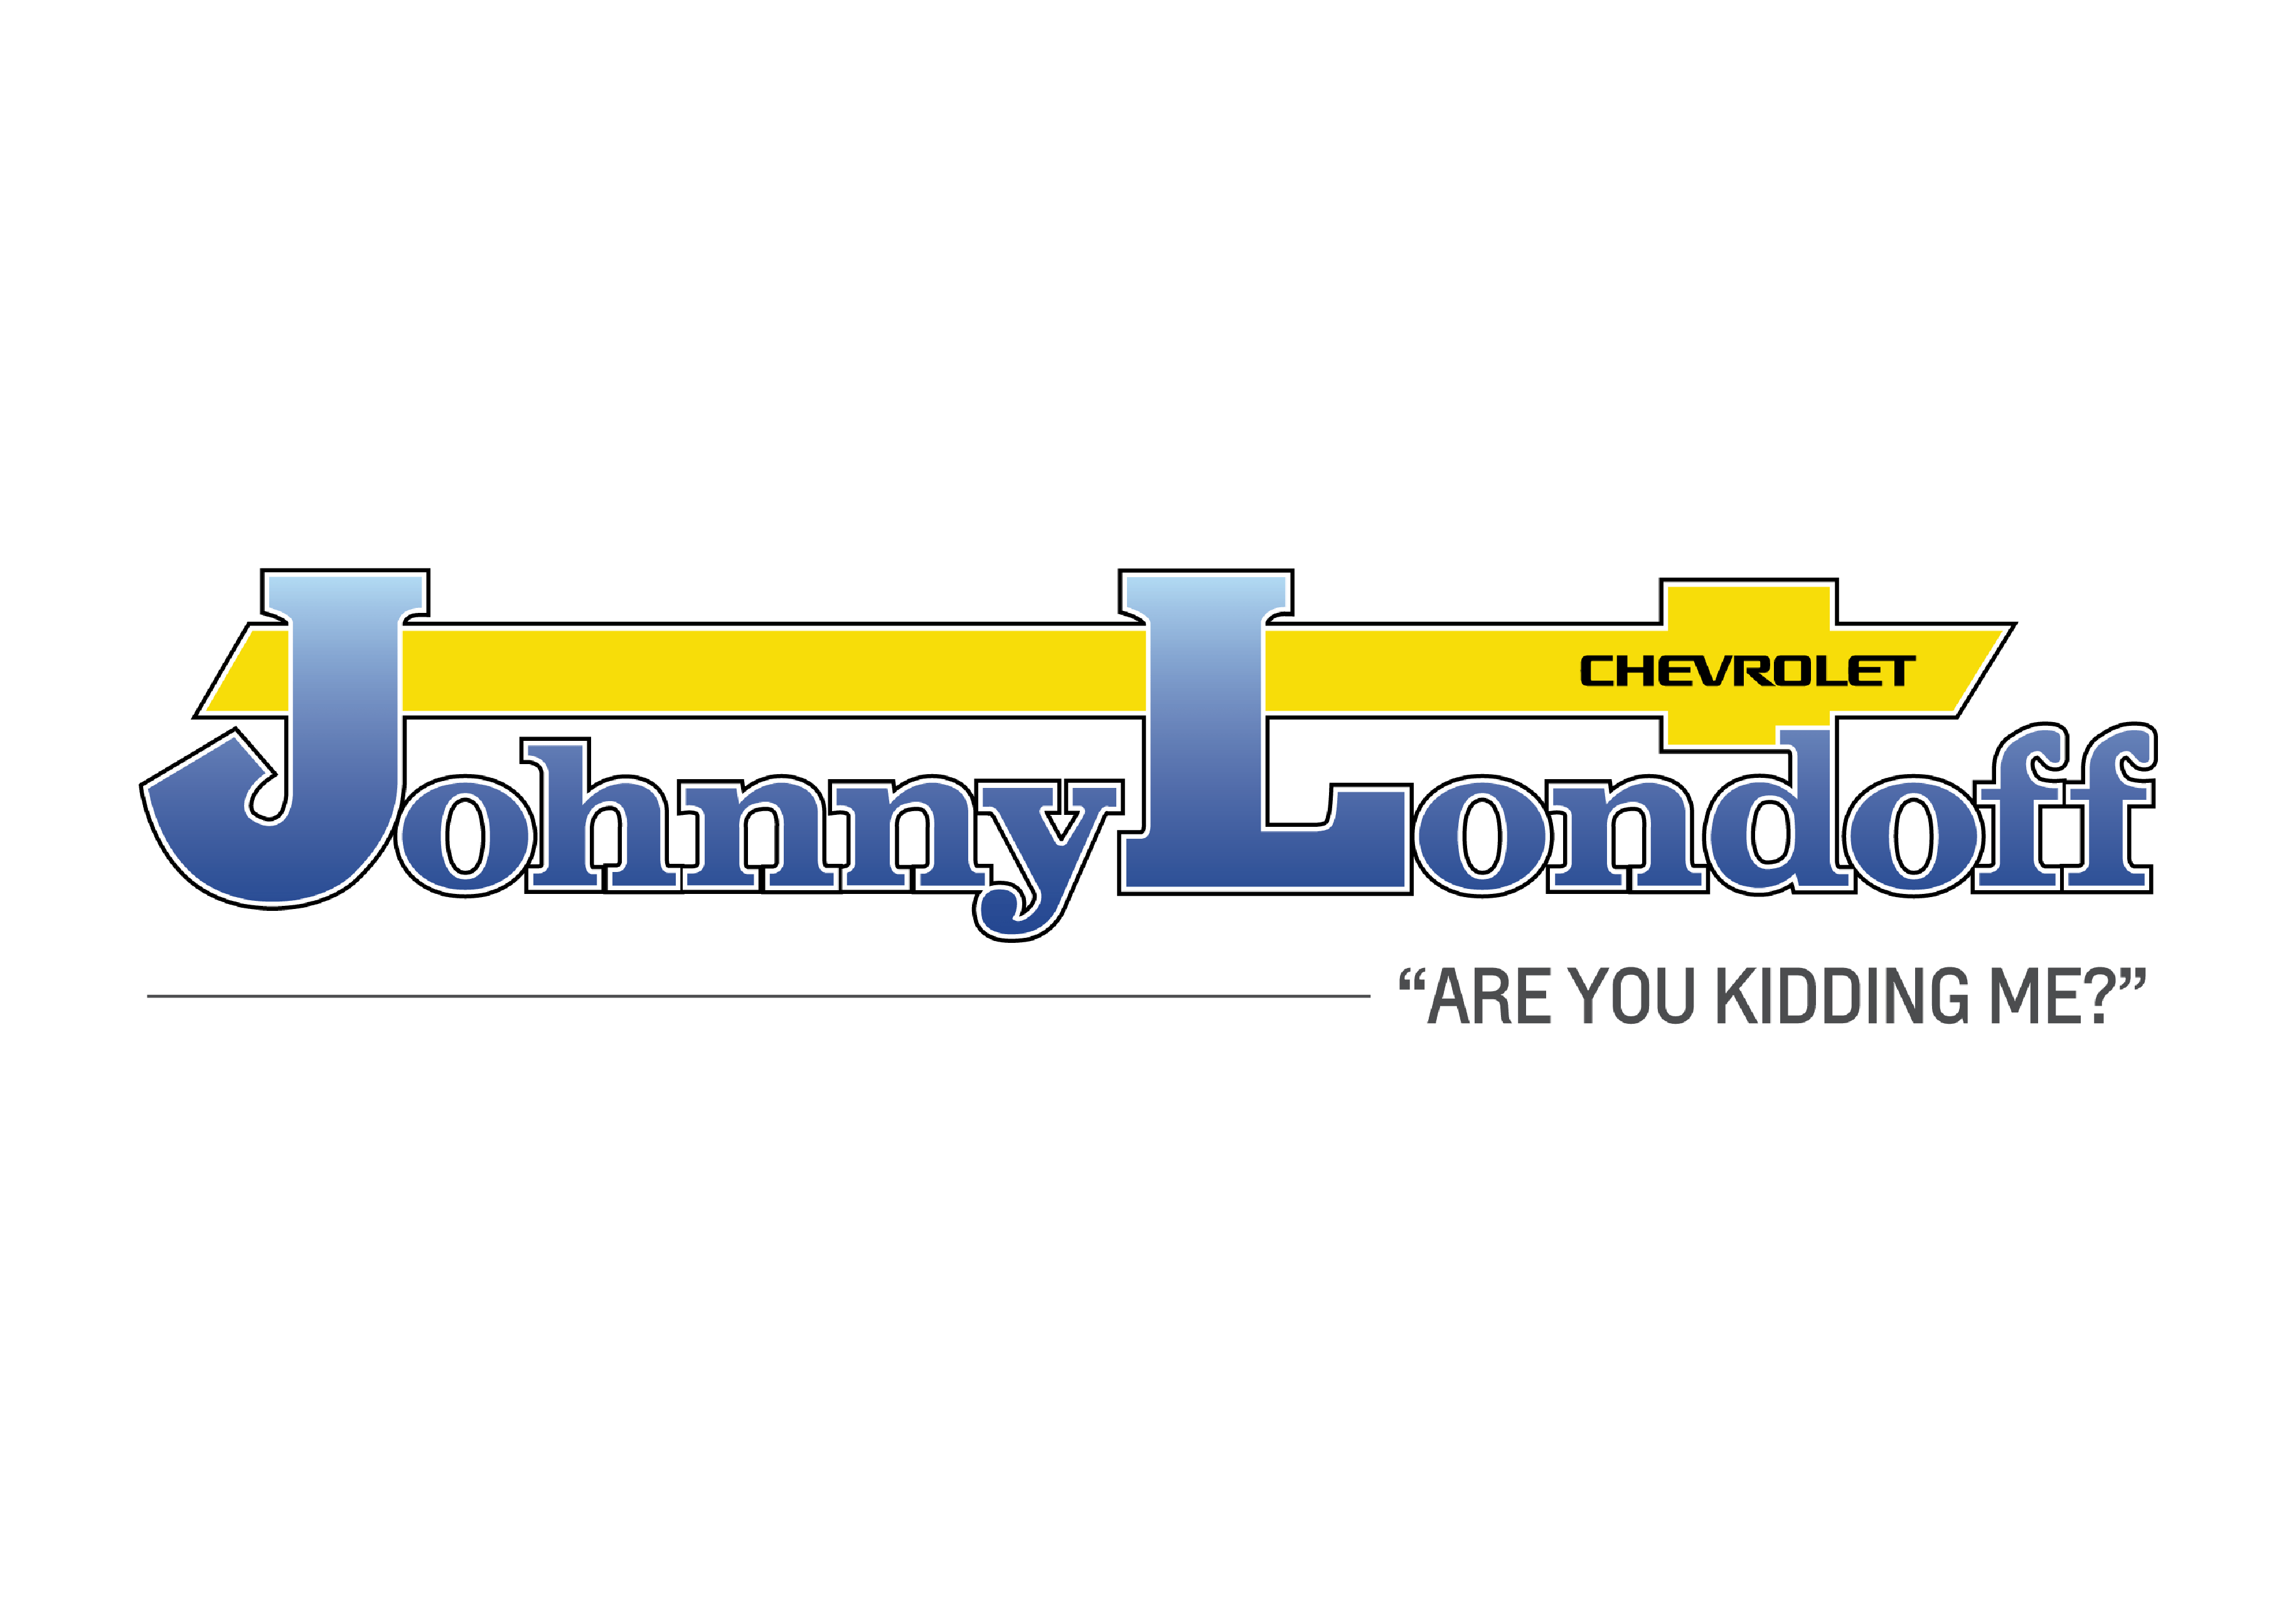 Johnny Londoff logo